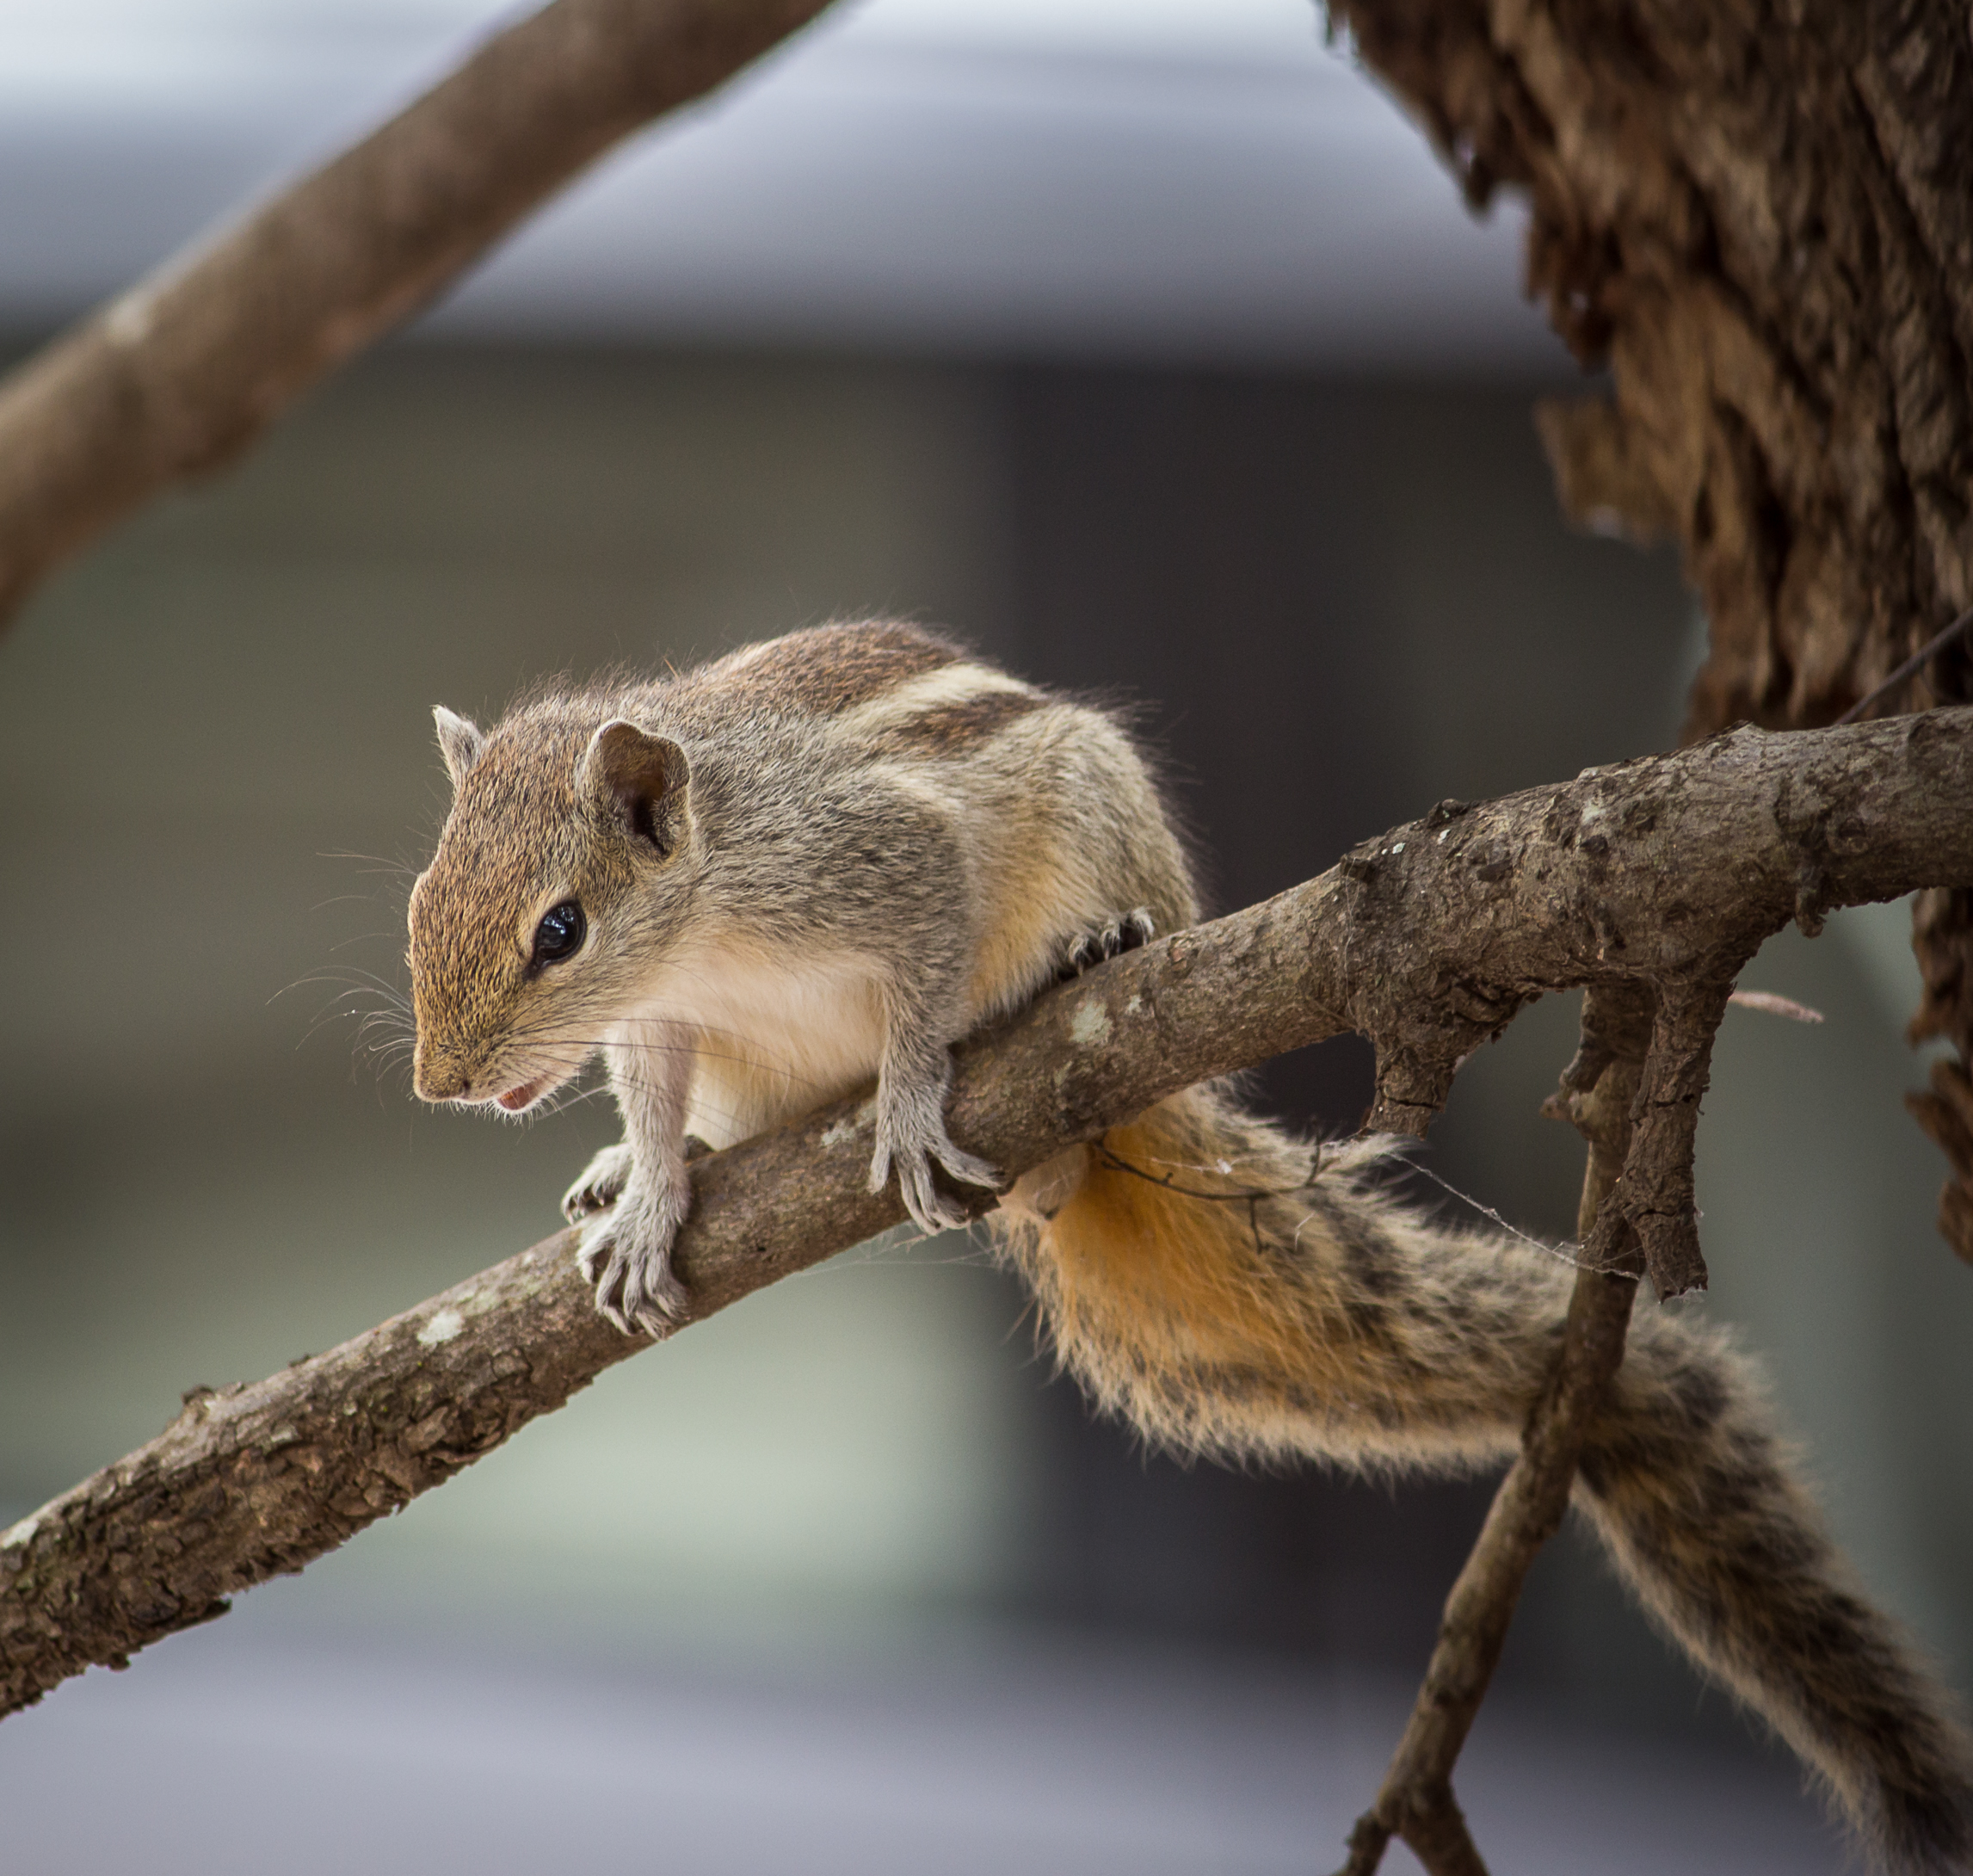 Squirrel on tree